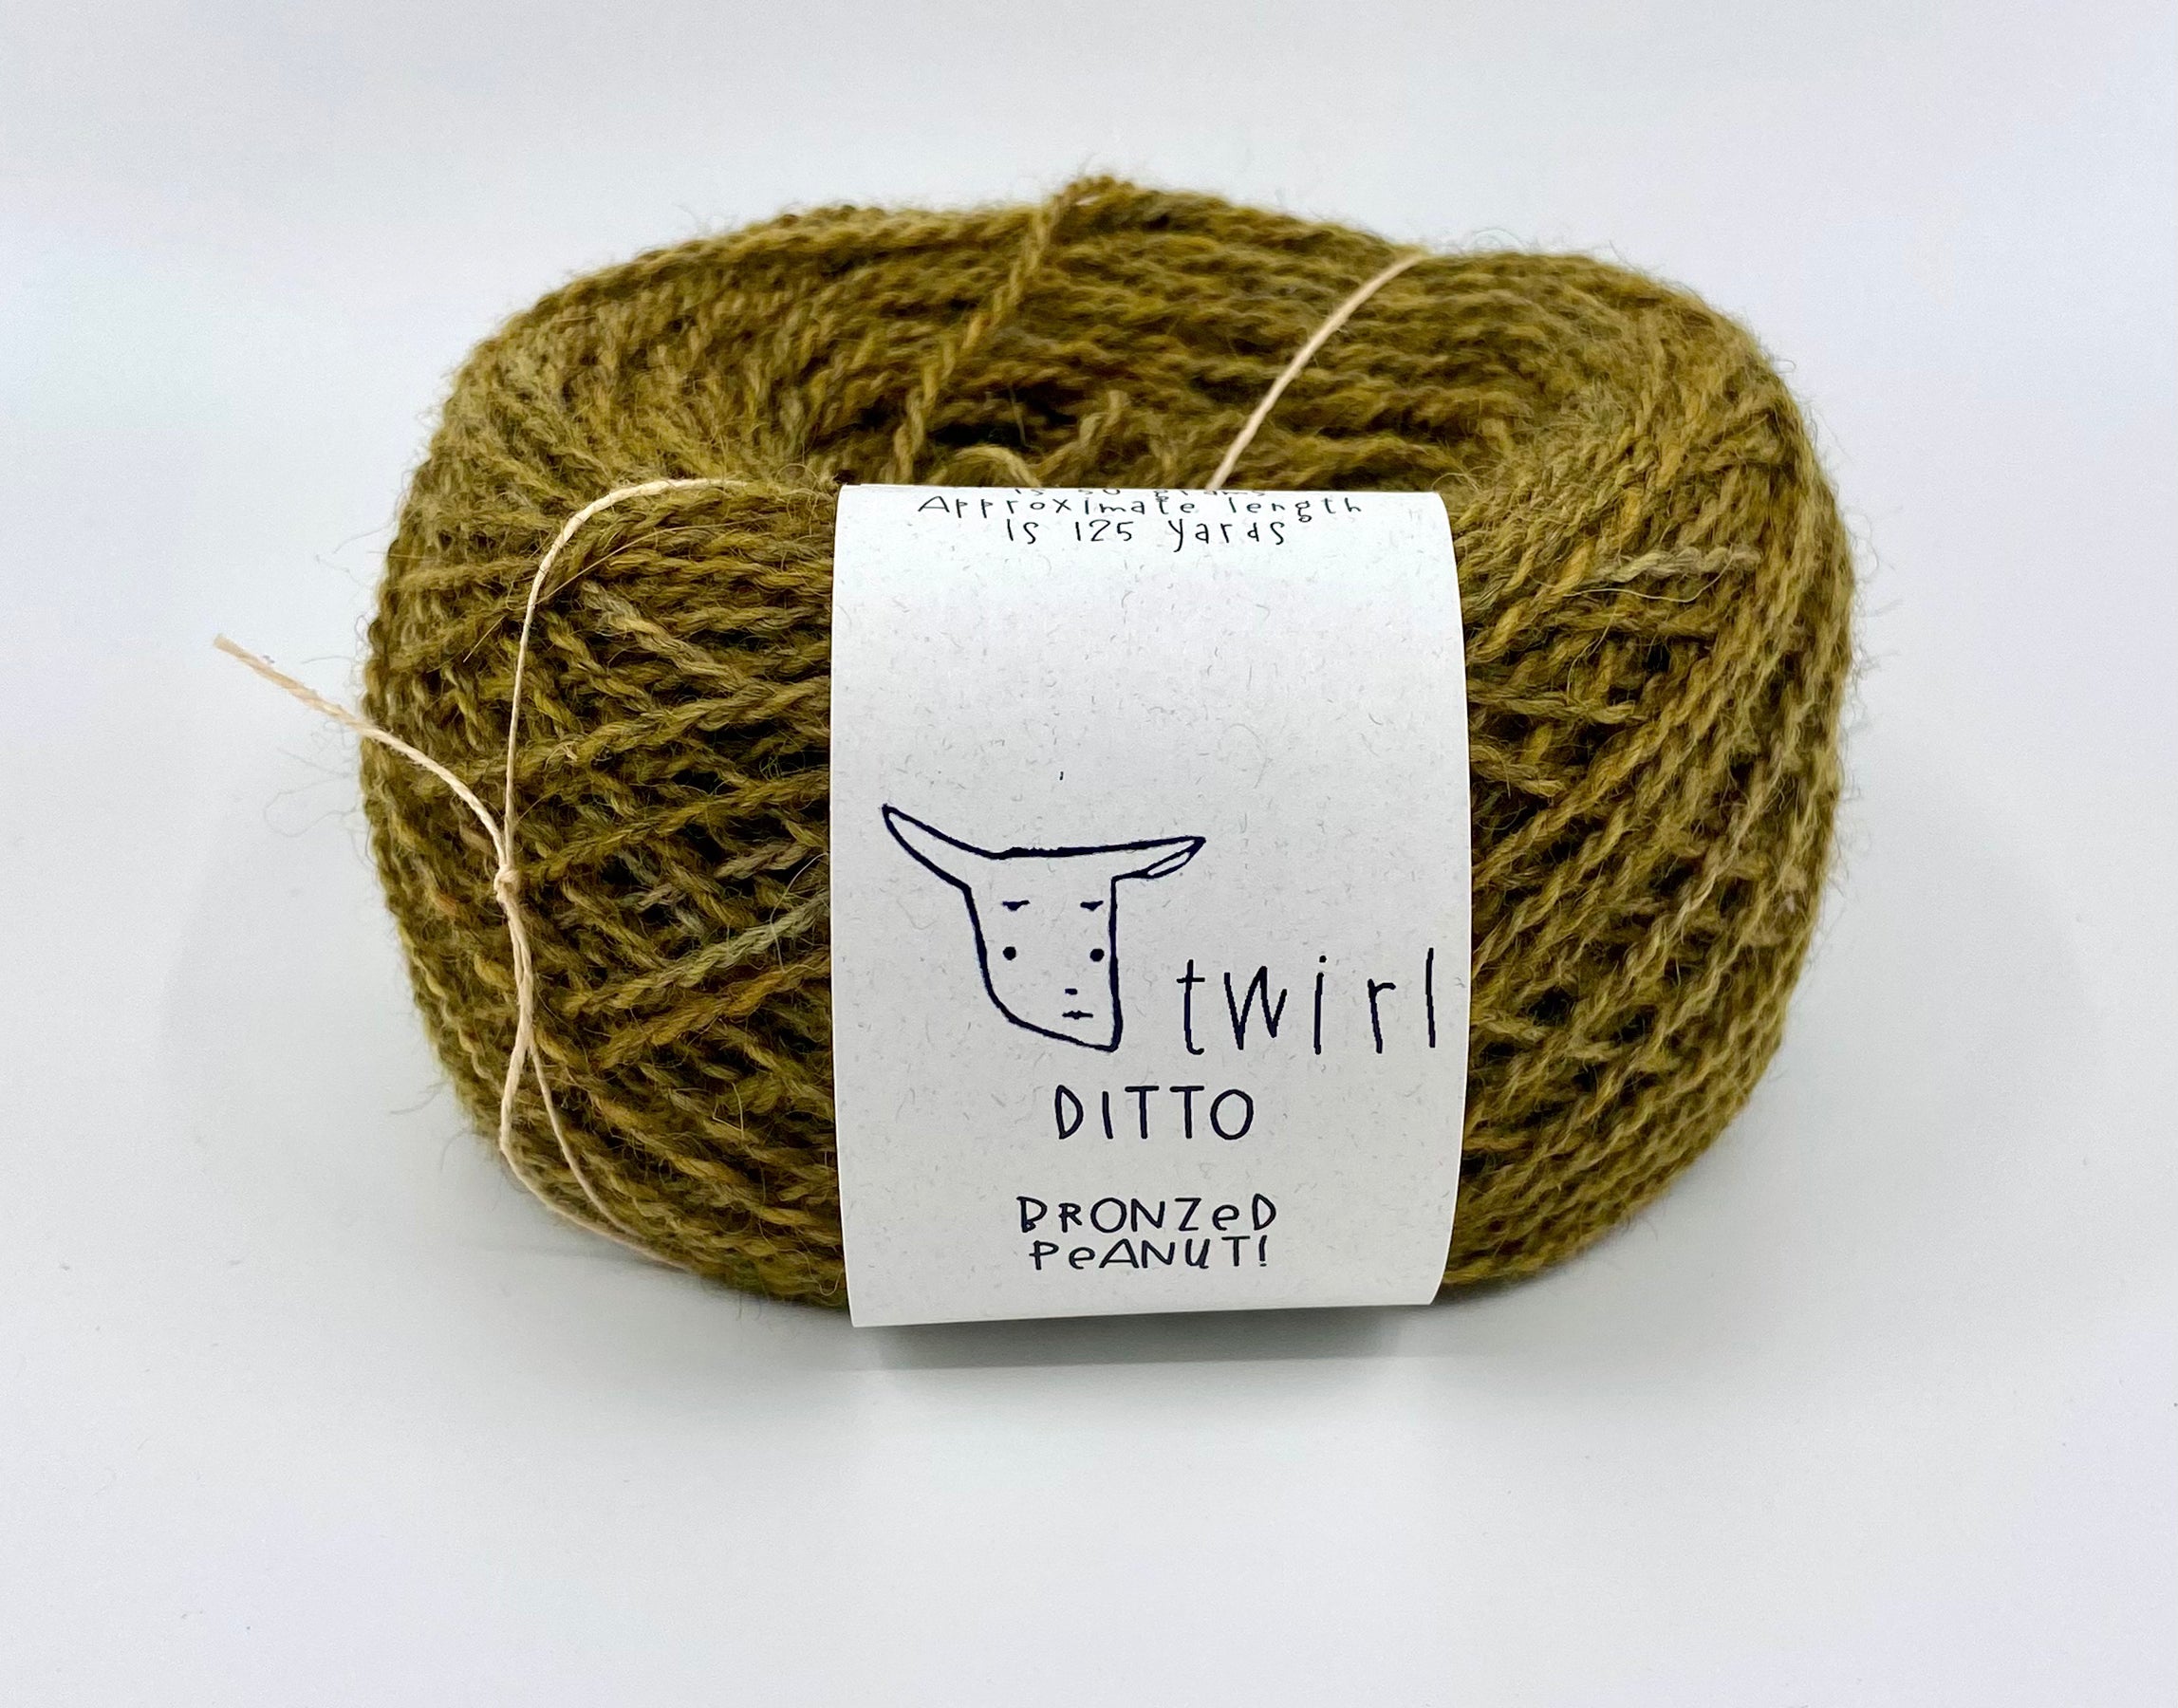 Twirl Ditto